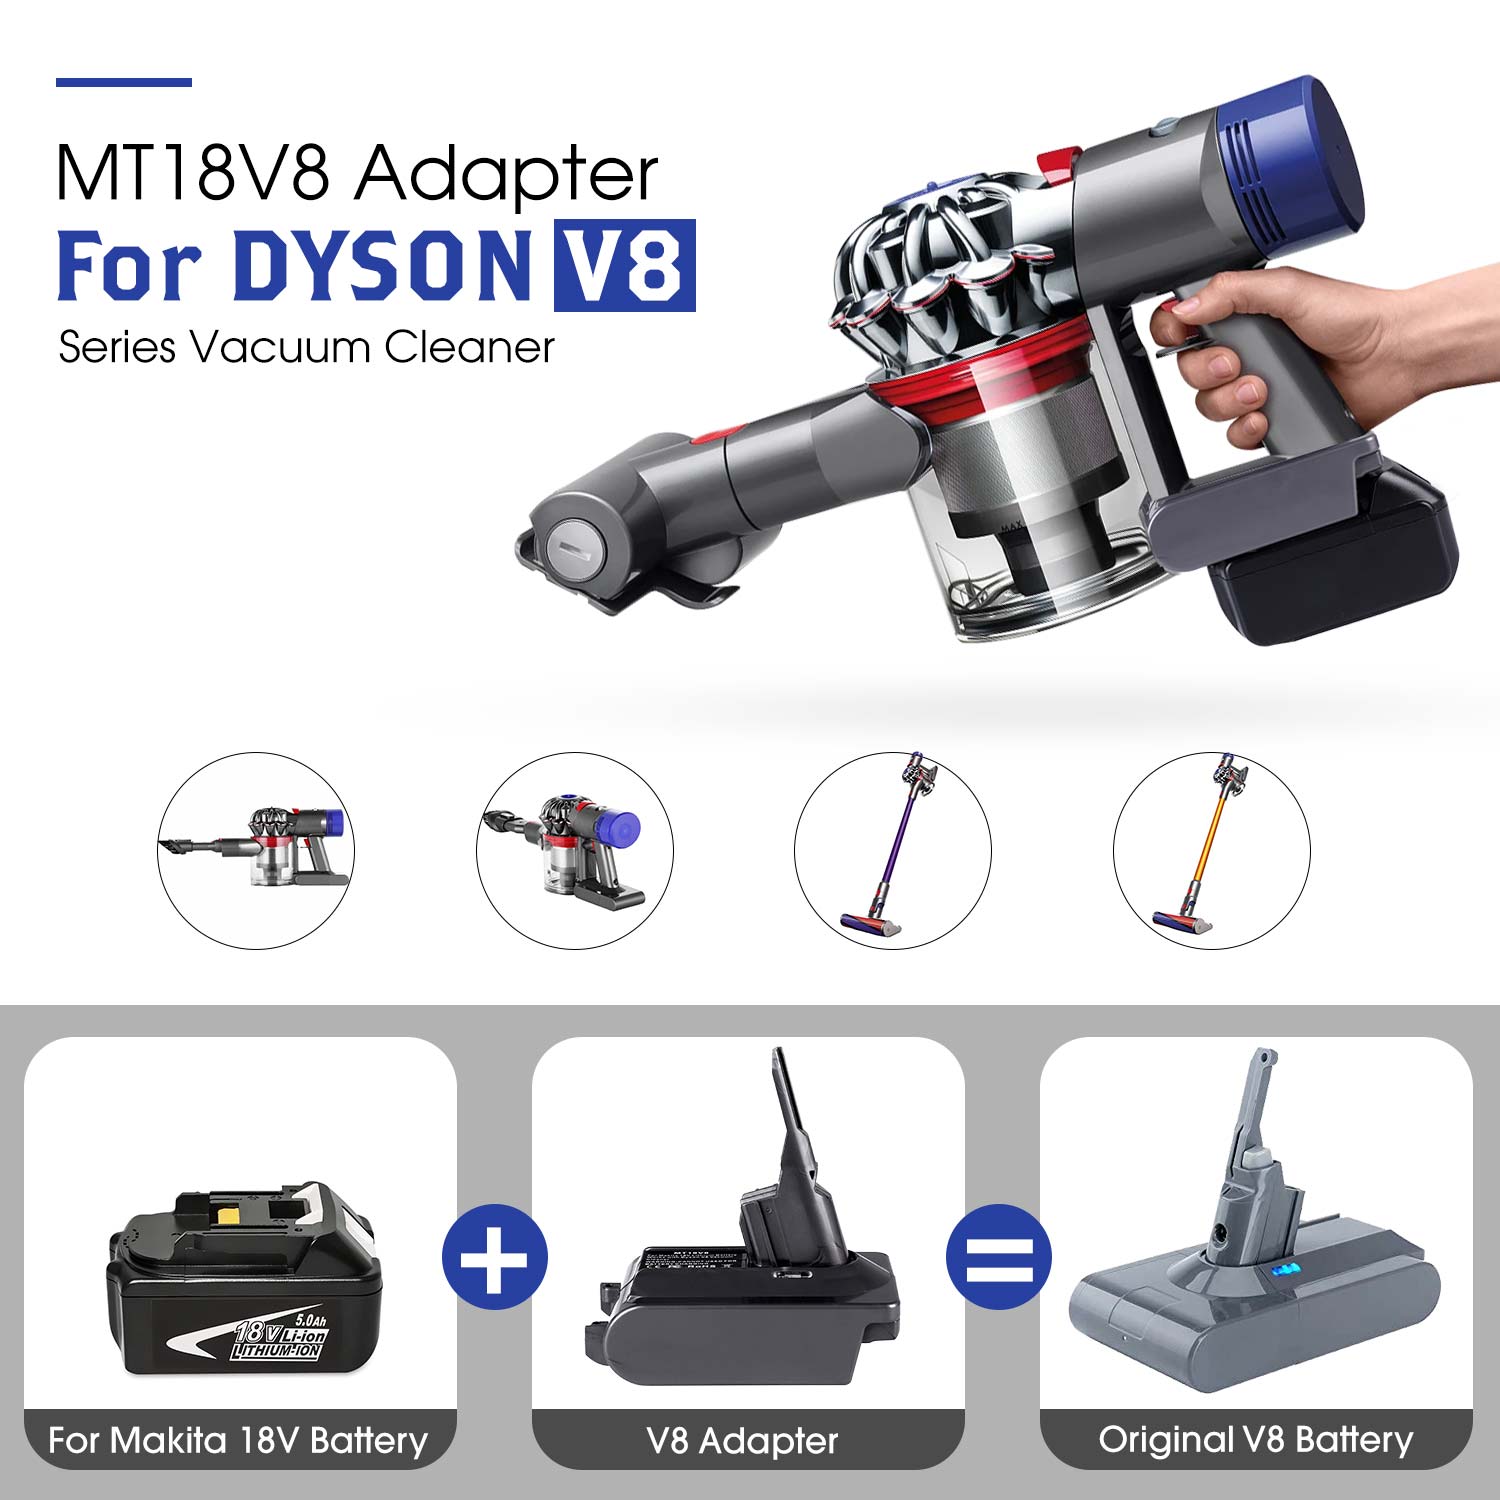 Dyason V8 Batterieadapter für Makita 18V Lithium Batterie umgebaut auf Dyson V8 Batterie